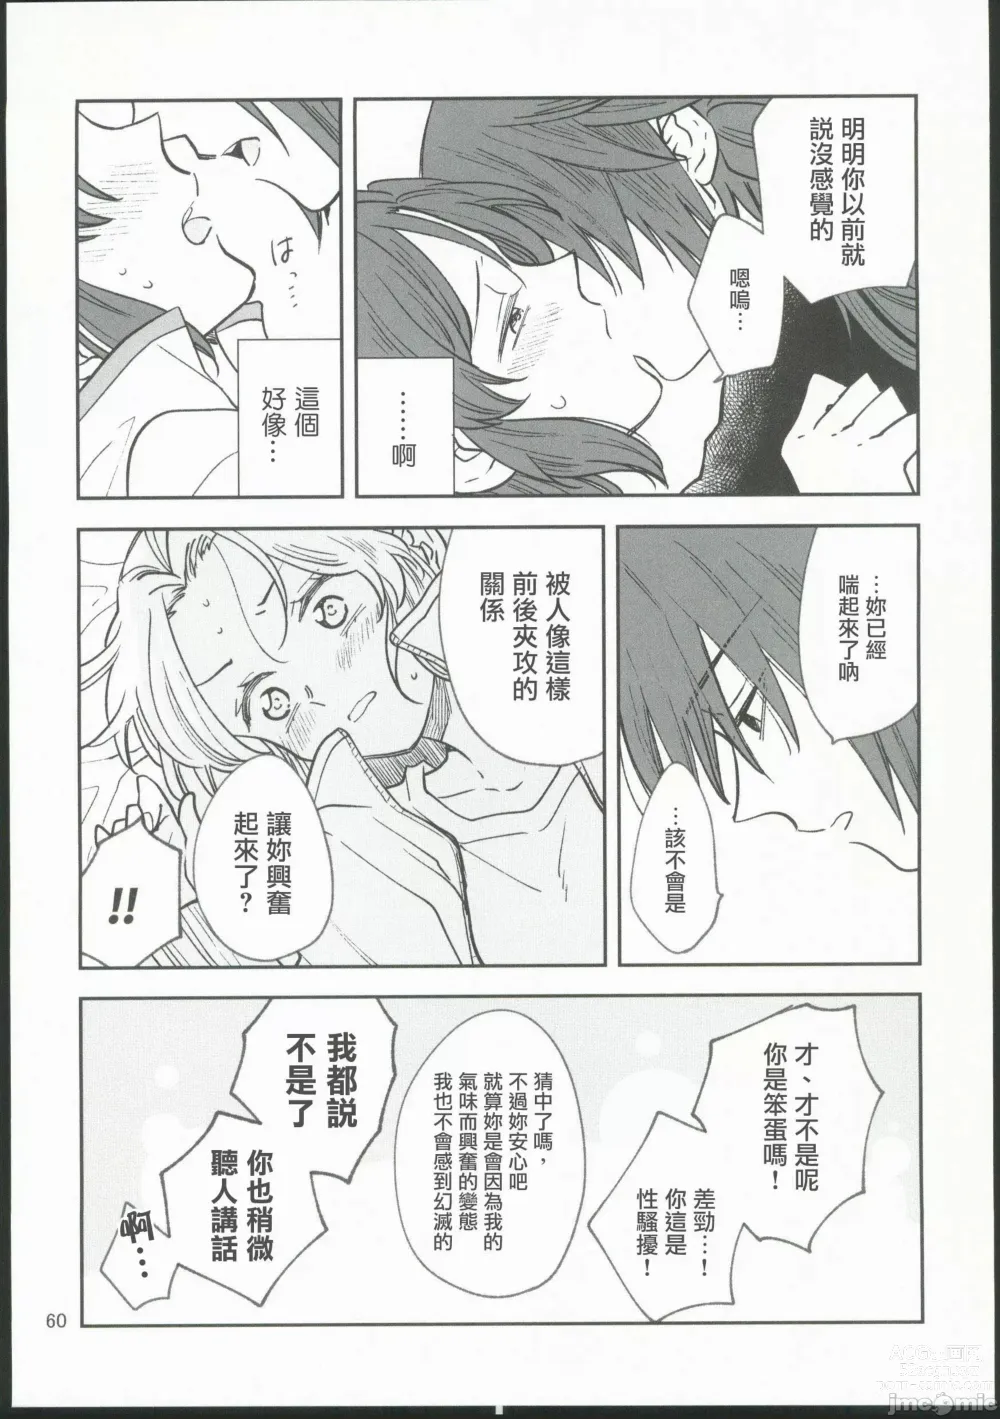 Page 59 of doujinshi Koi Tsumugi